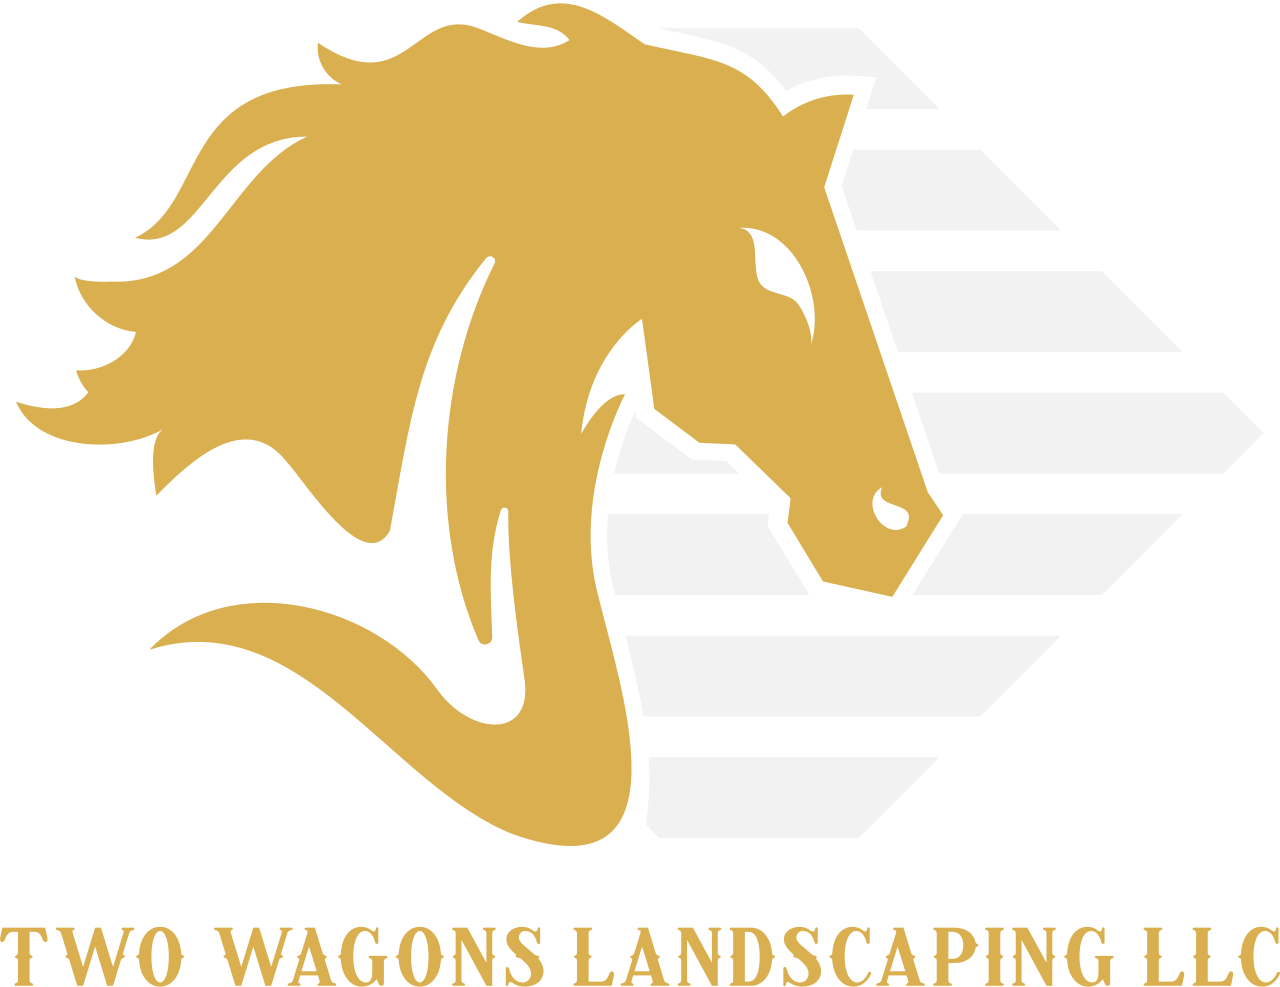 Two wagons Landscaping LLC's logo